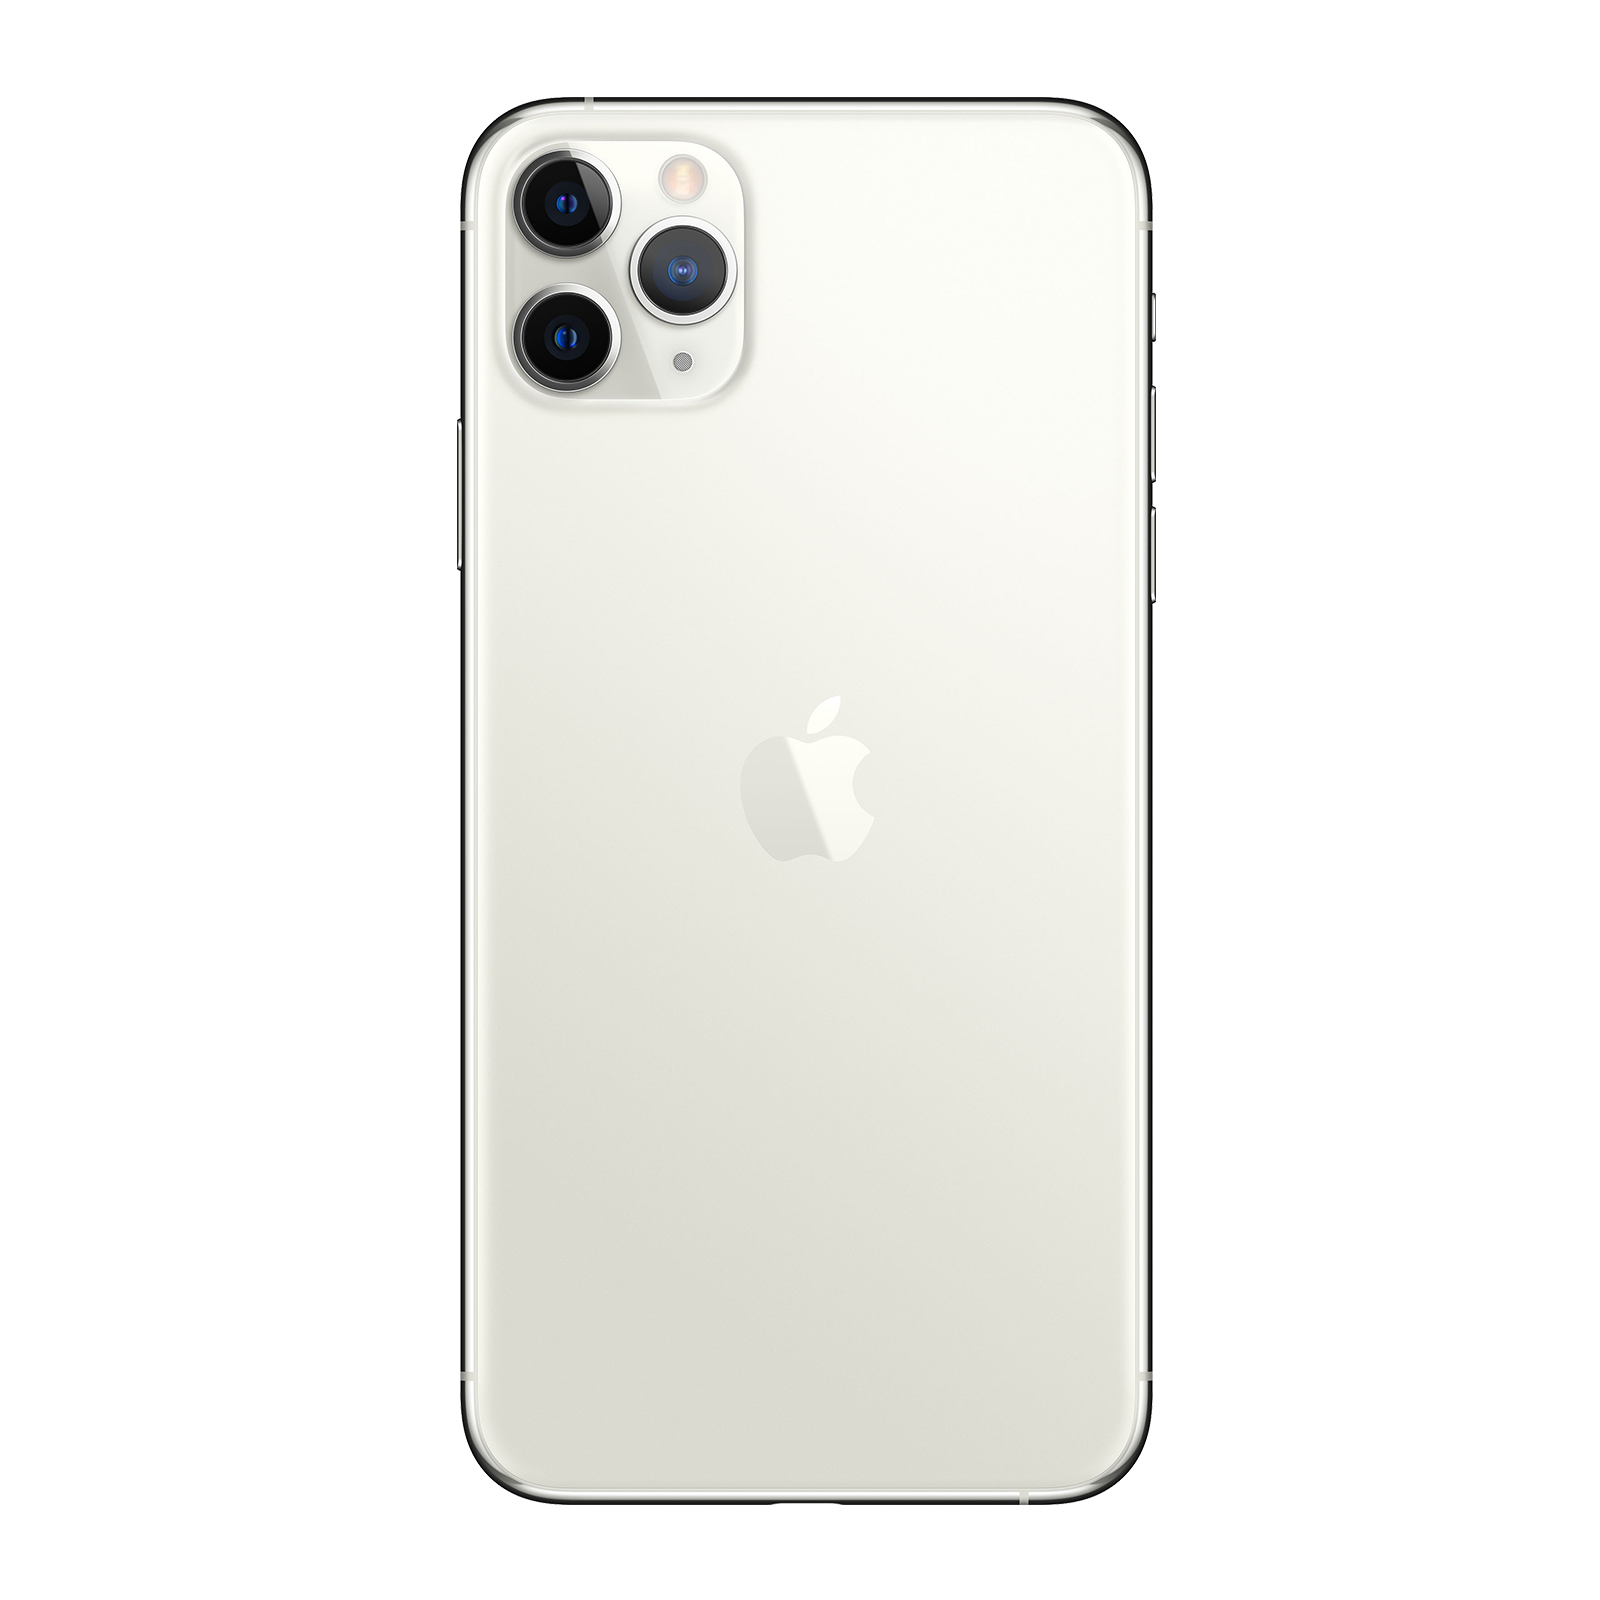 Apple iPhone 11 Pro Max 64GB Silver Good - Sprint